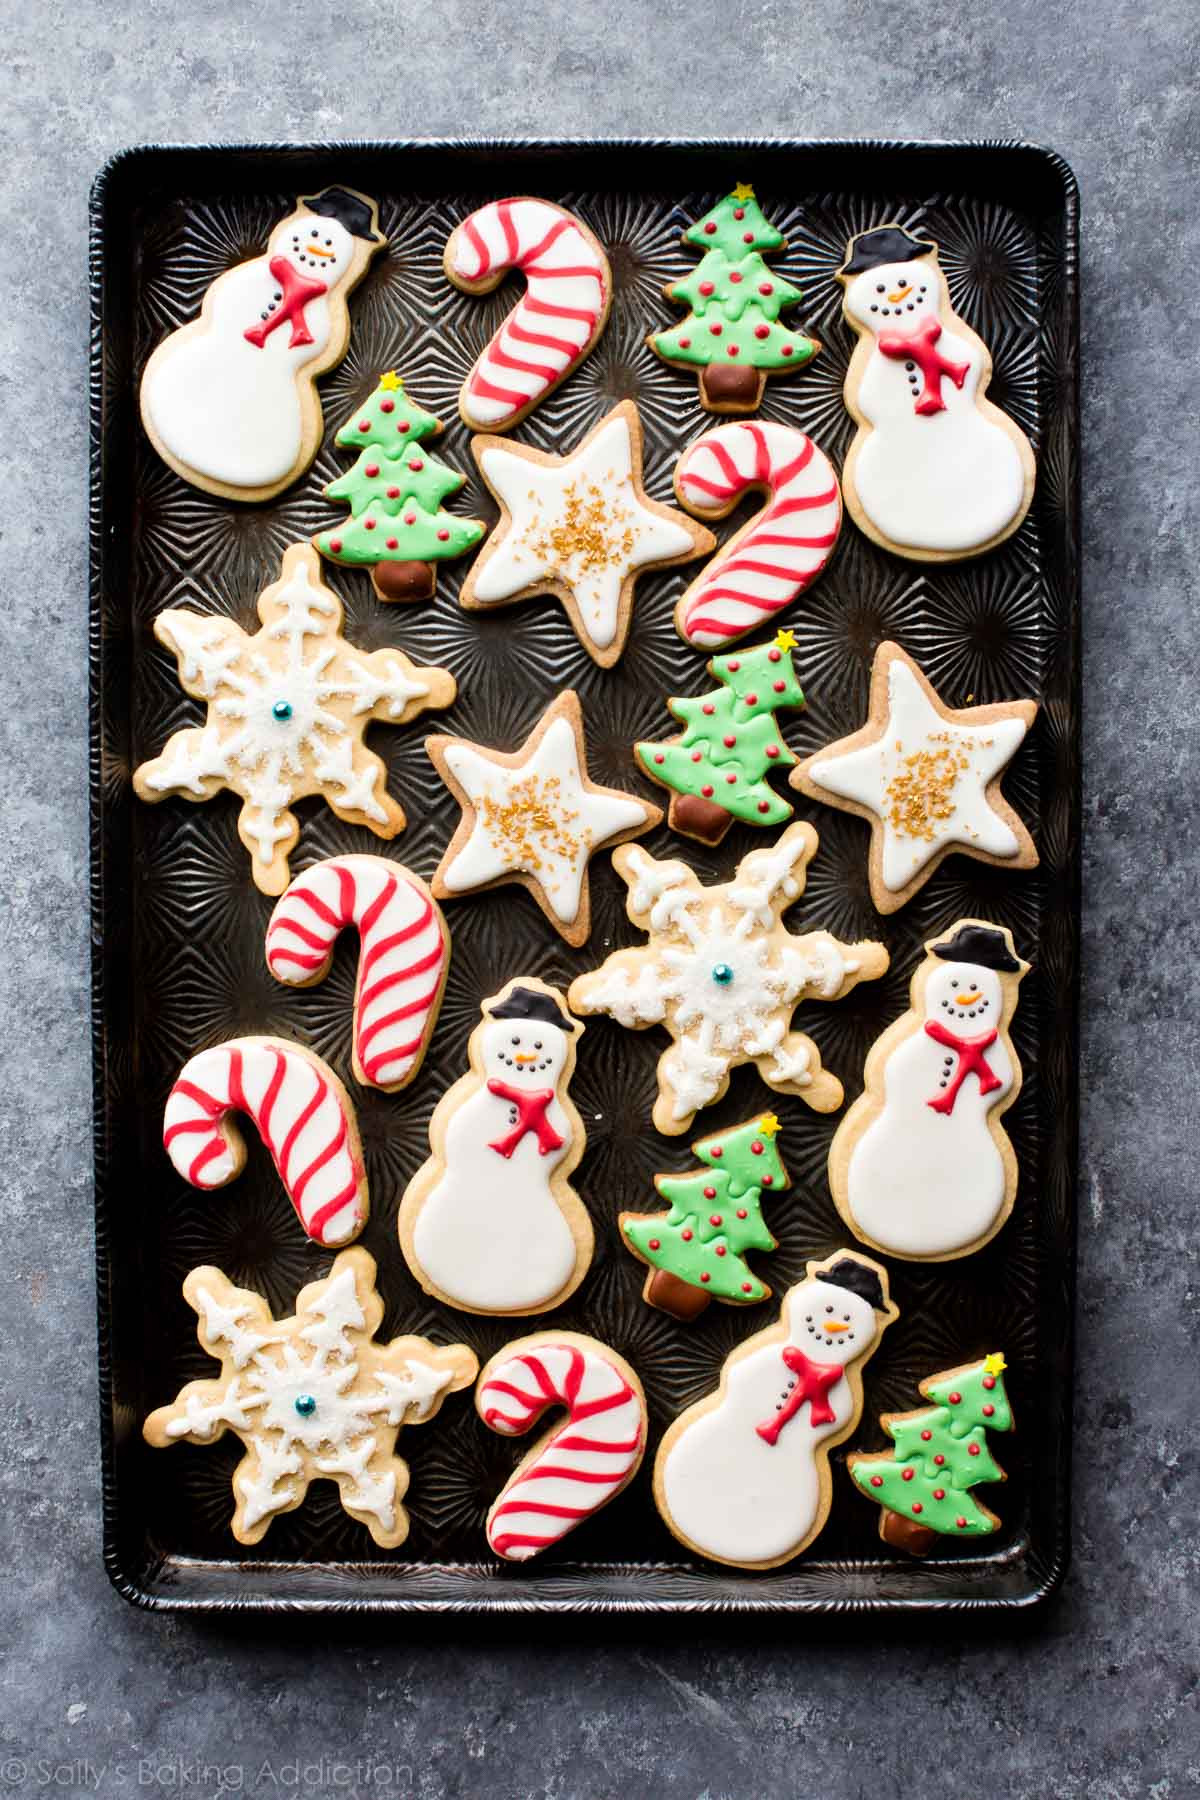 Decorating Christmas Cookies
 1 Sugar Cookie Dough 5 Ways to Decorate Sallys Baking